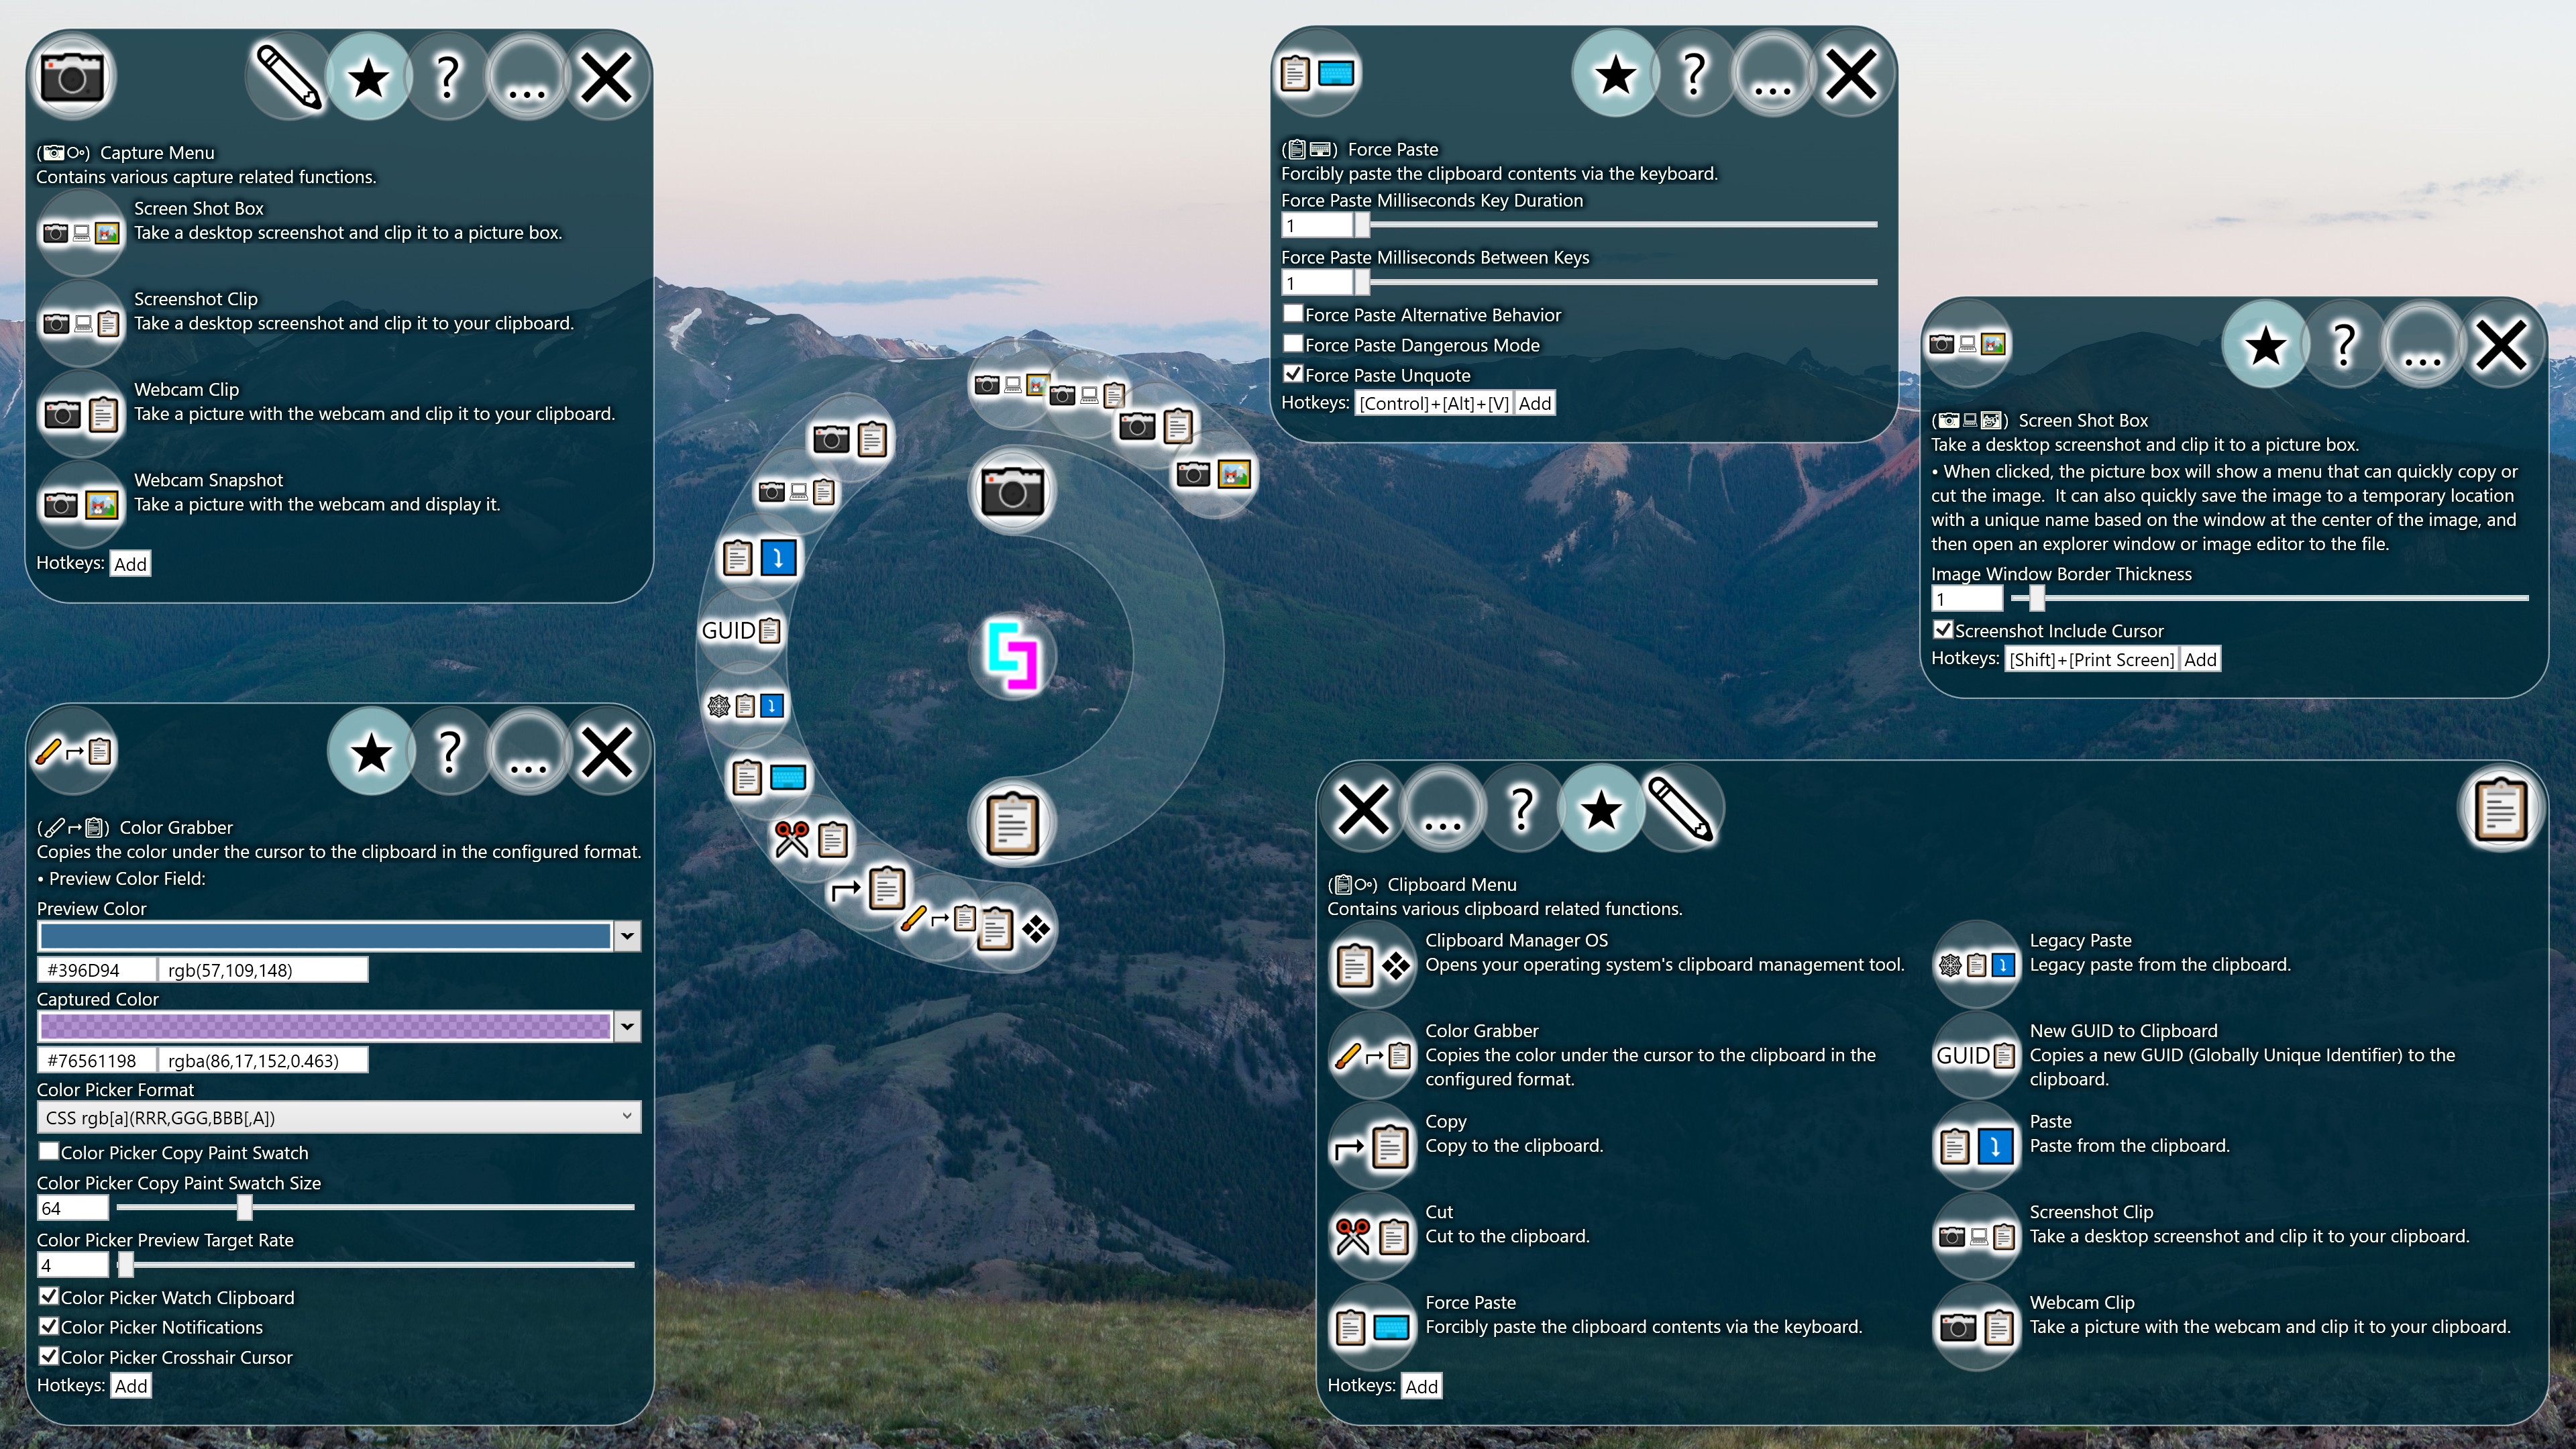 Simplode Suite - Capture and Clipboard Utilities screenshot